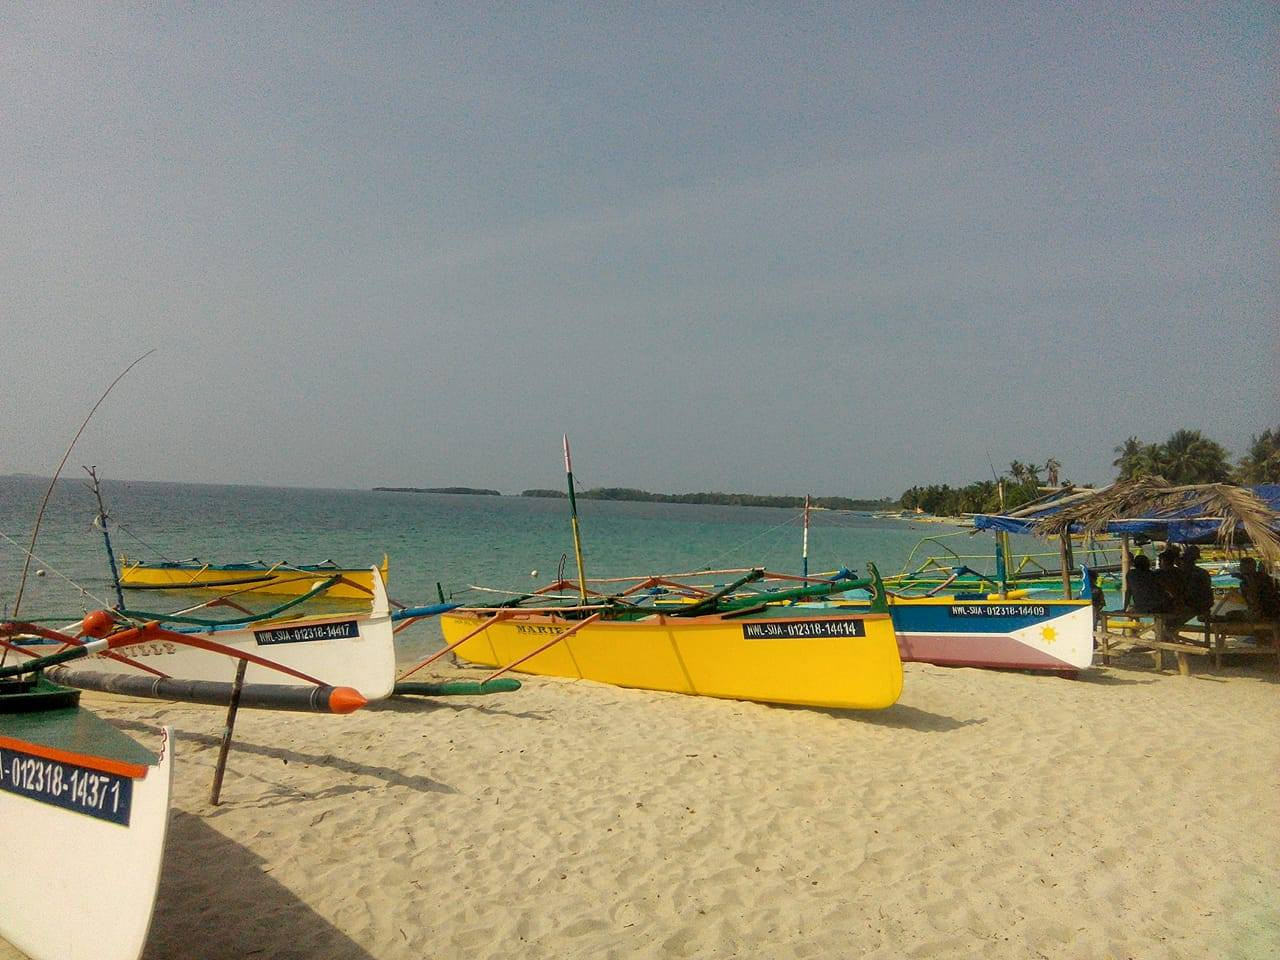 D' Abella's Beach Resort